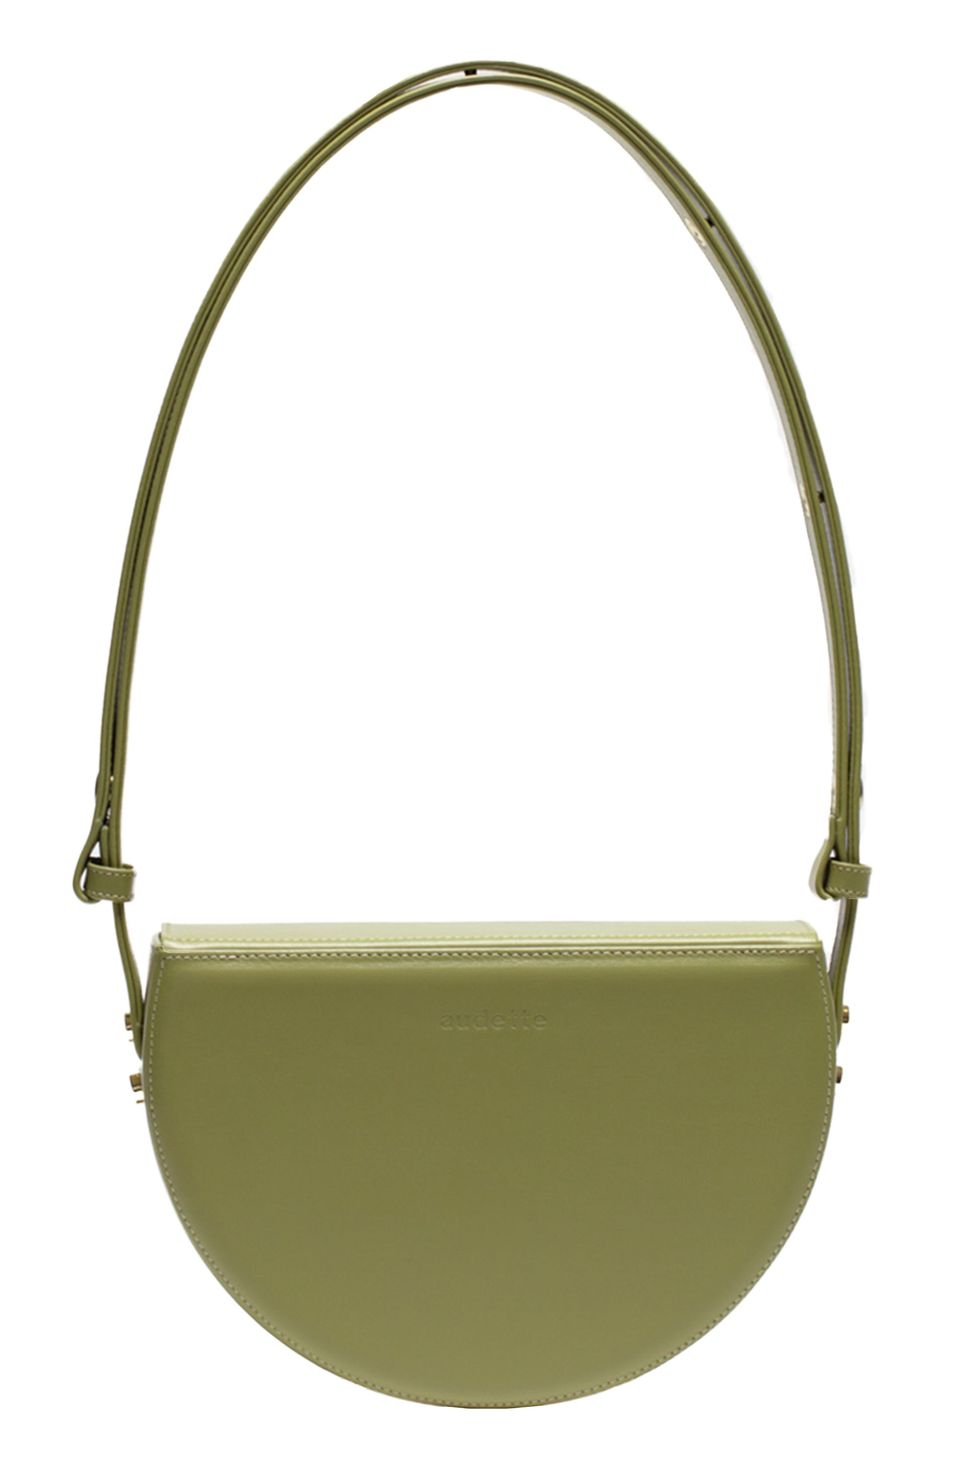 Newposs Famous Designer Brand Bags Women Leather Handbags 2022